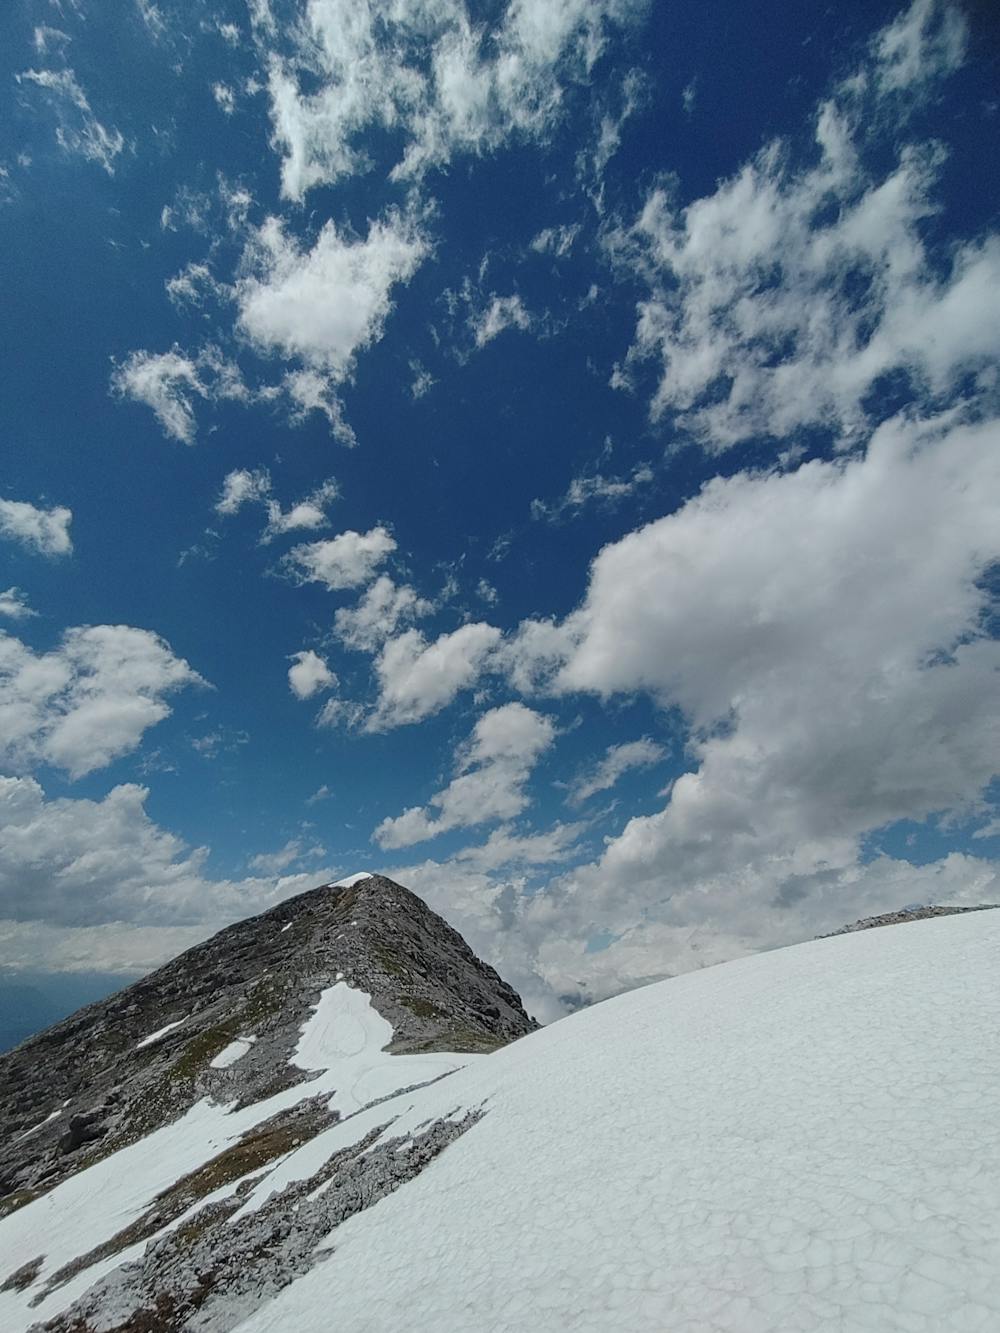 Photo from Little Solstein - Highest Peak of the Nordkette